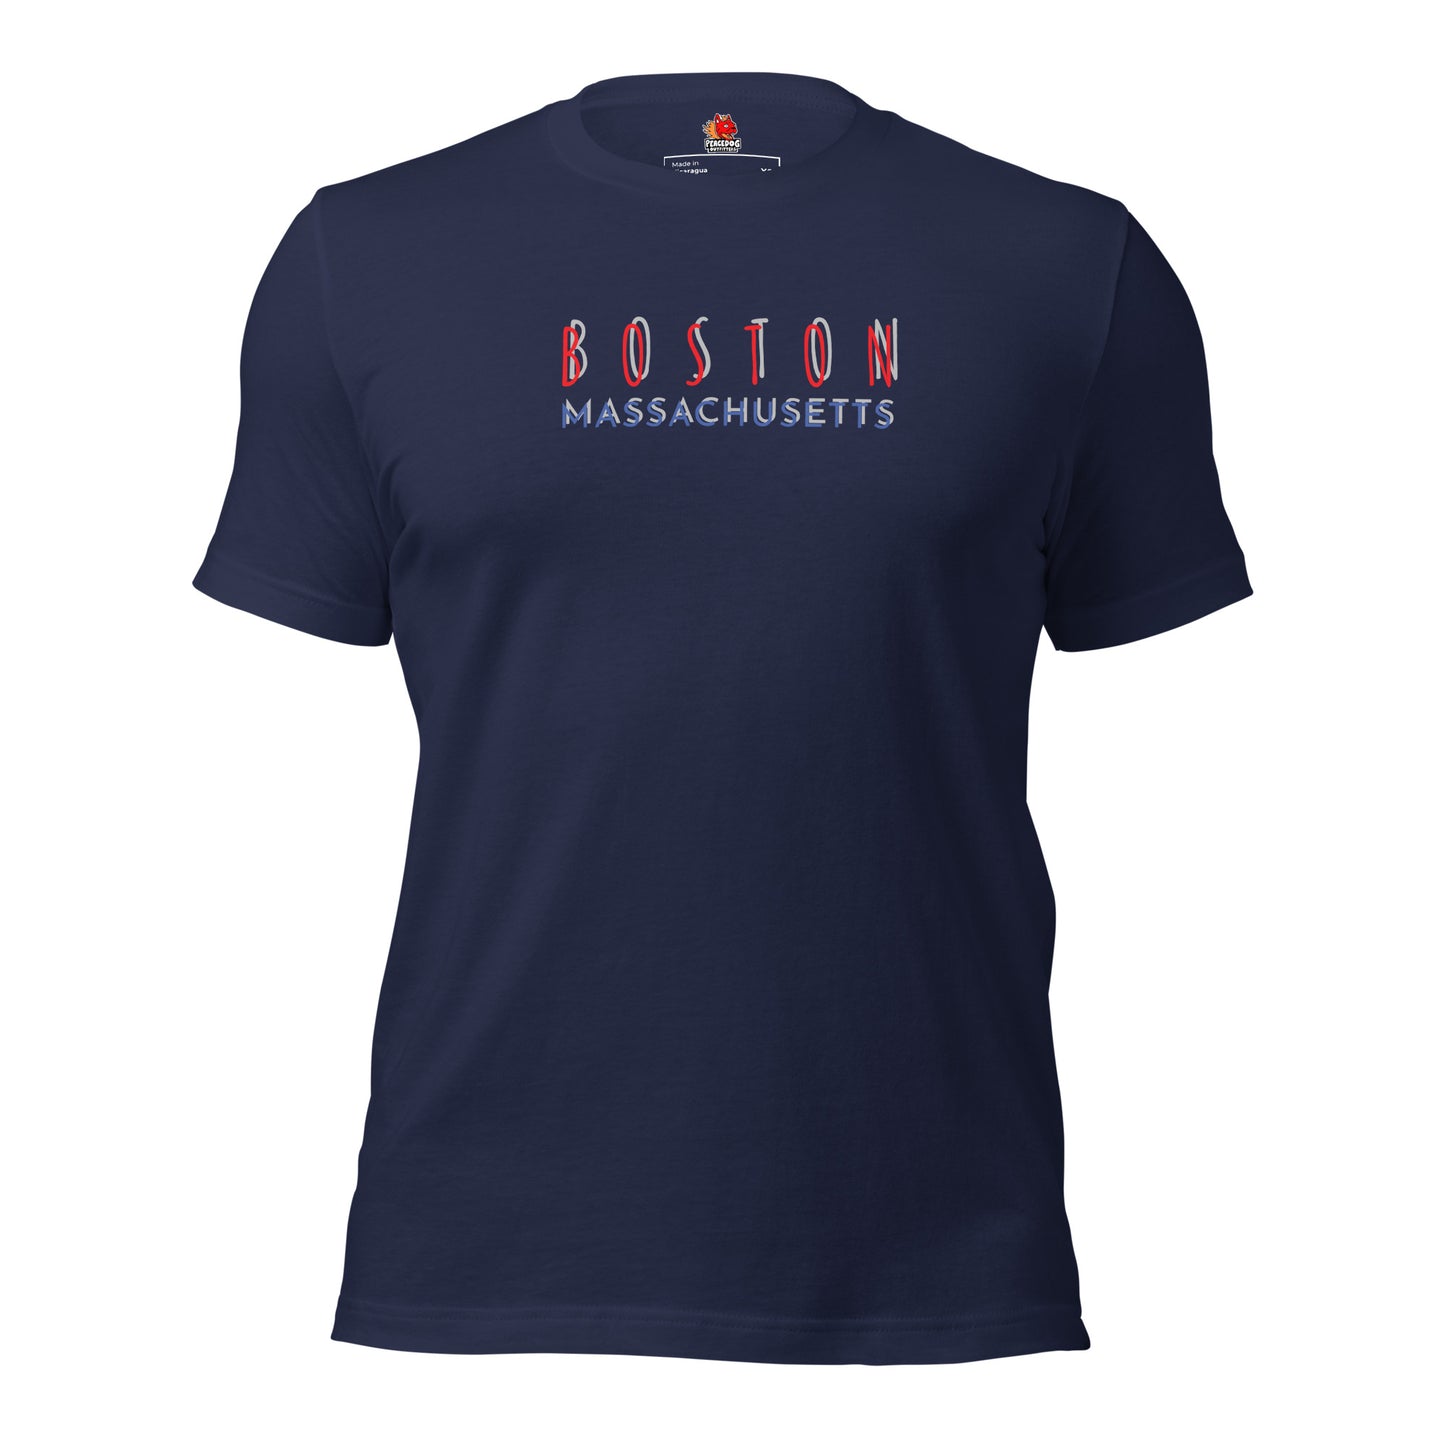 Boston, Massachusetts Typography Front Print T-shirt